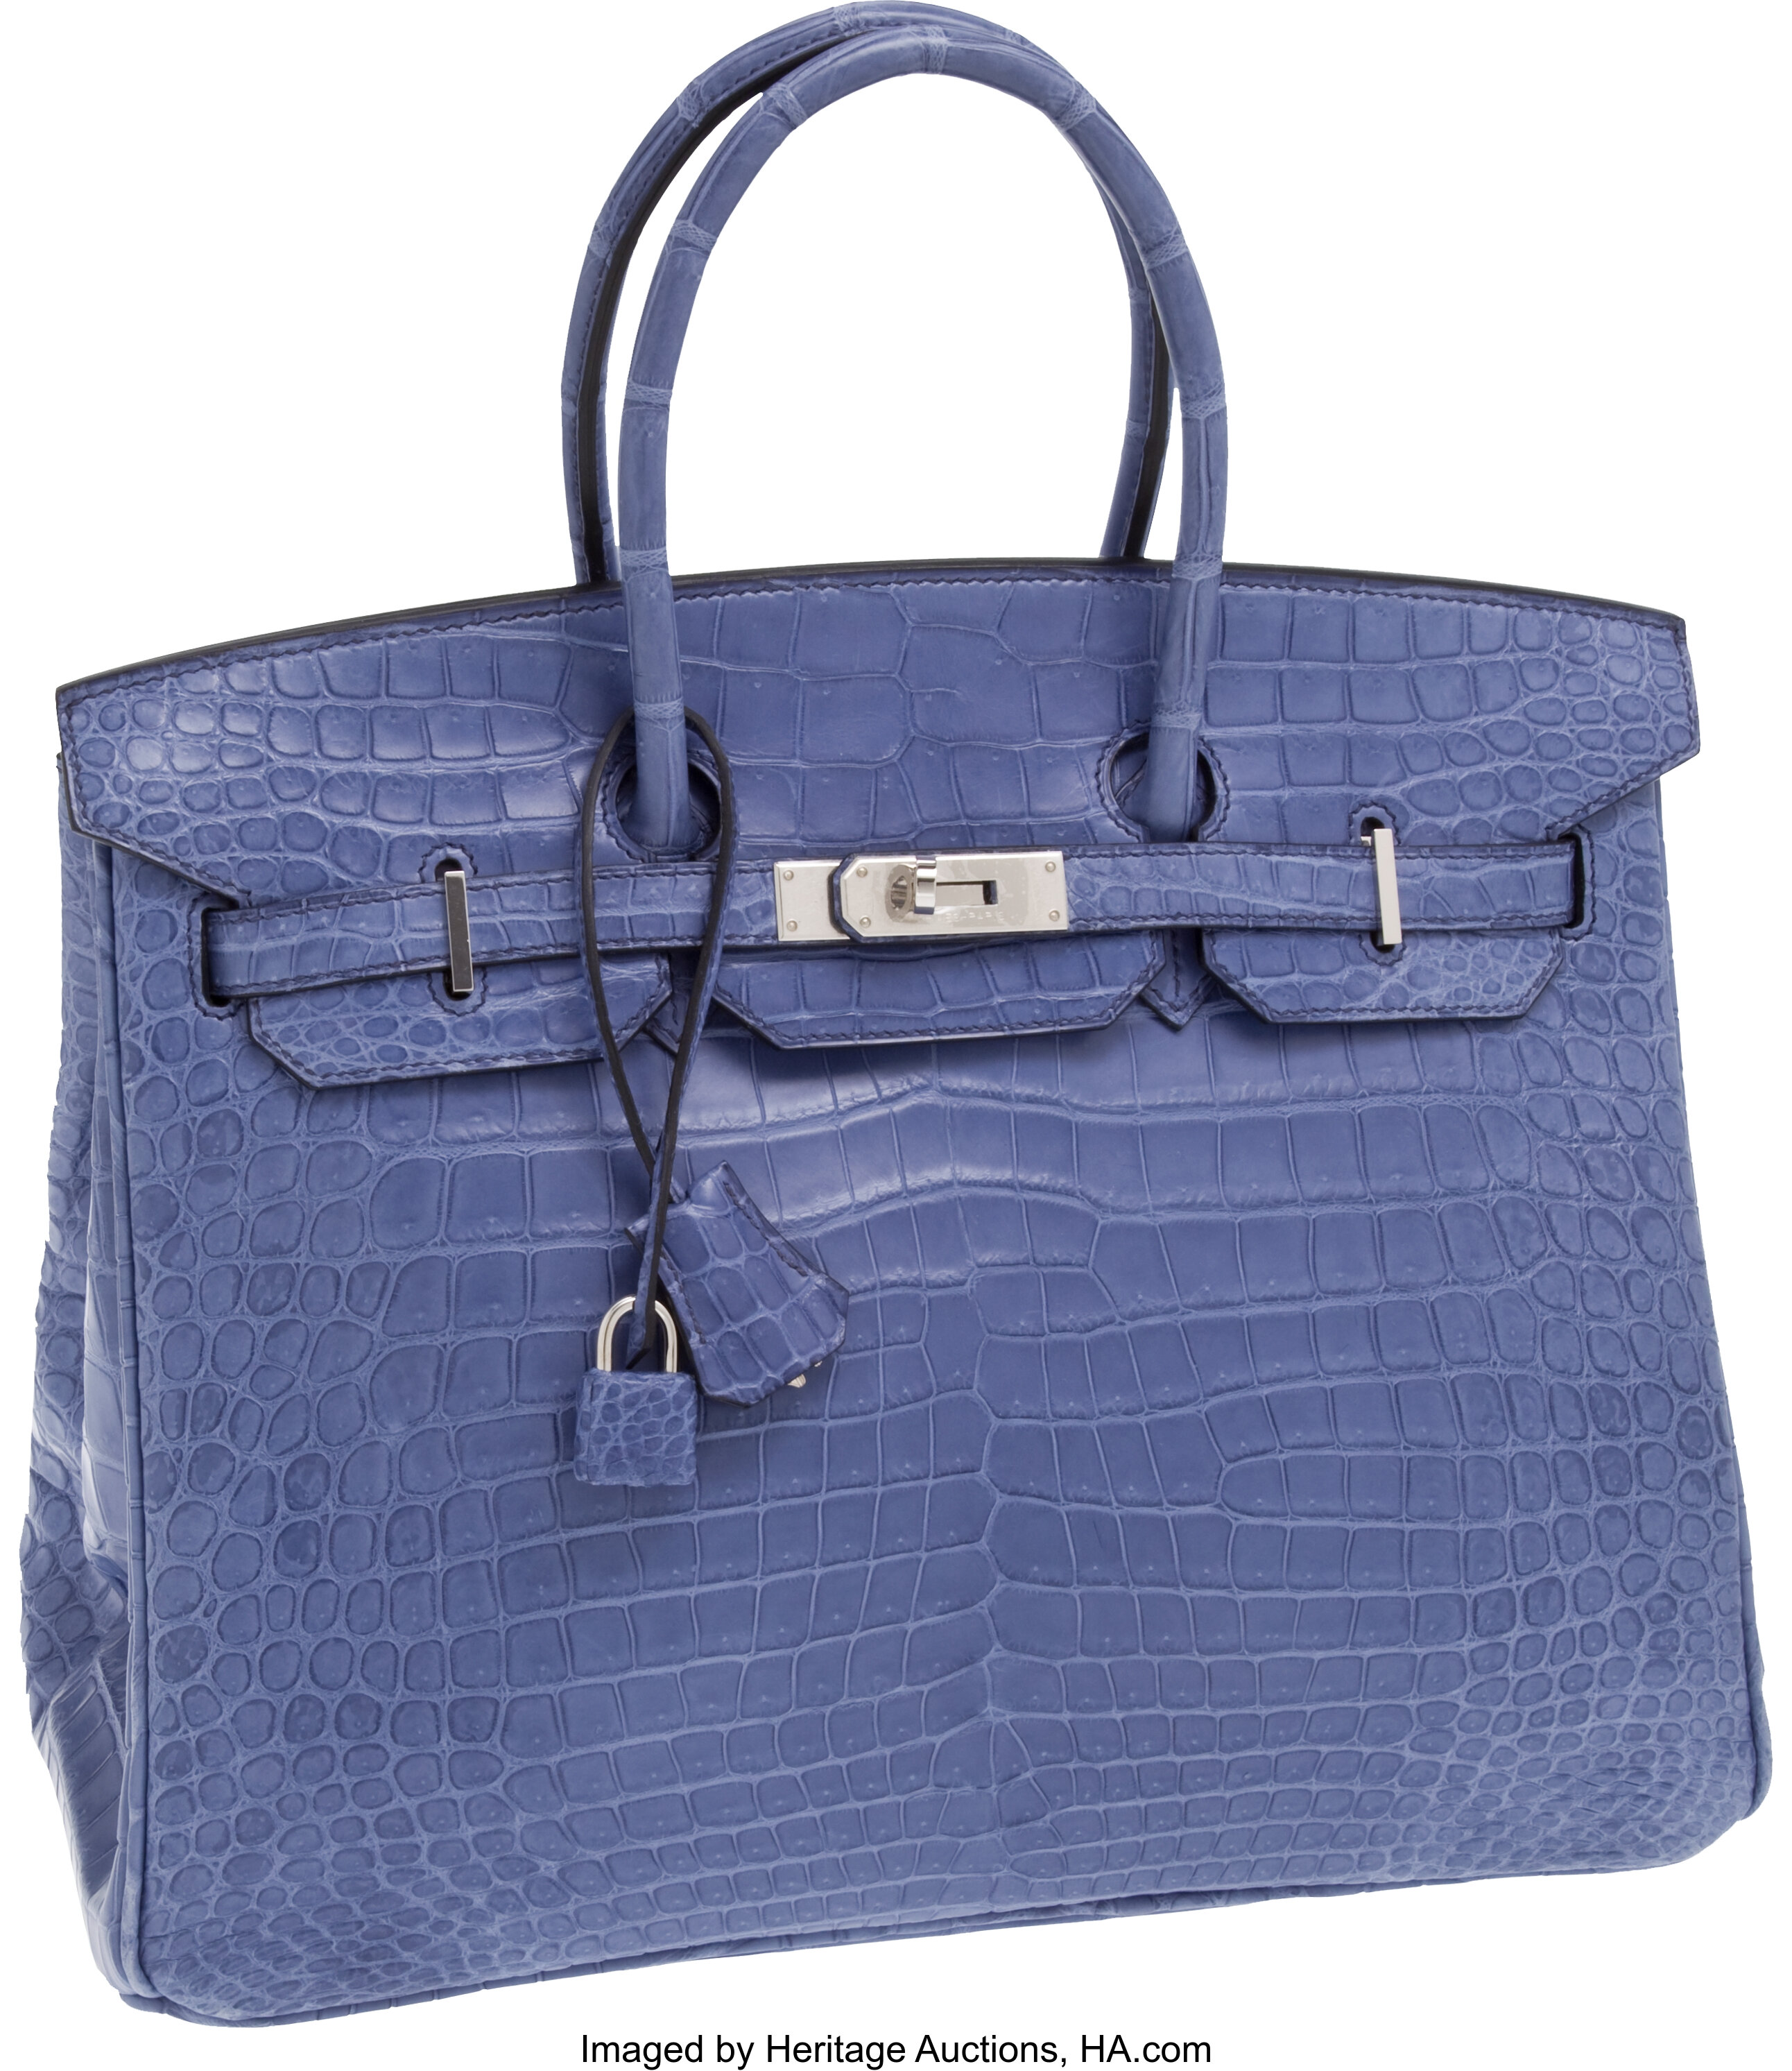 Hermes 35cm Matte Brighton Blue Porosus Crocodile Birkin Bag with